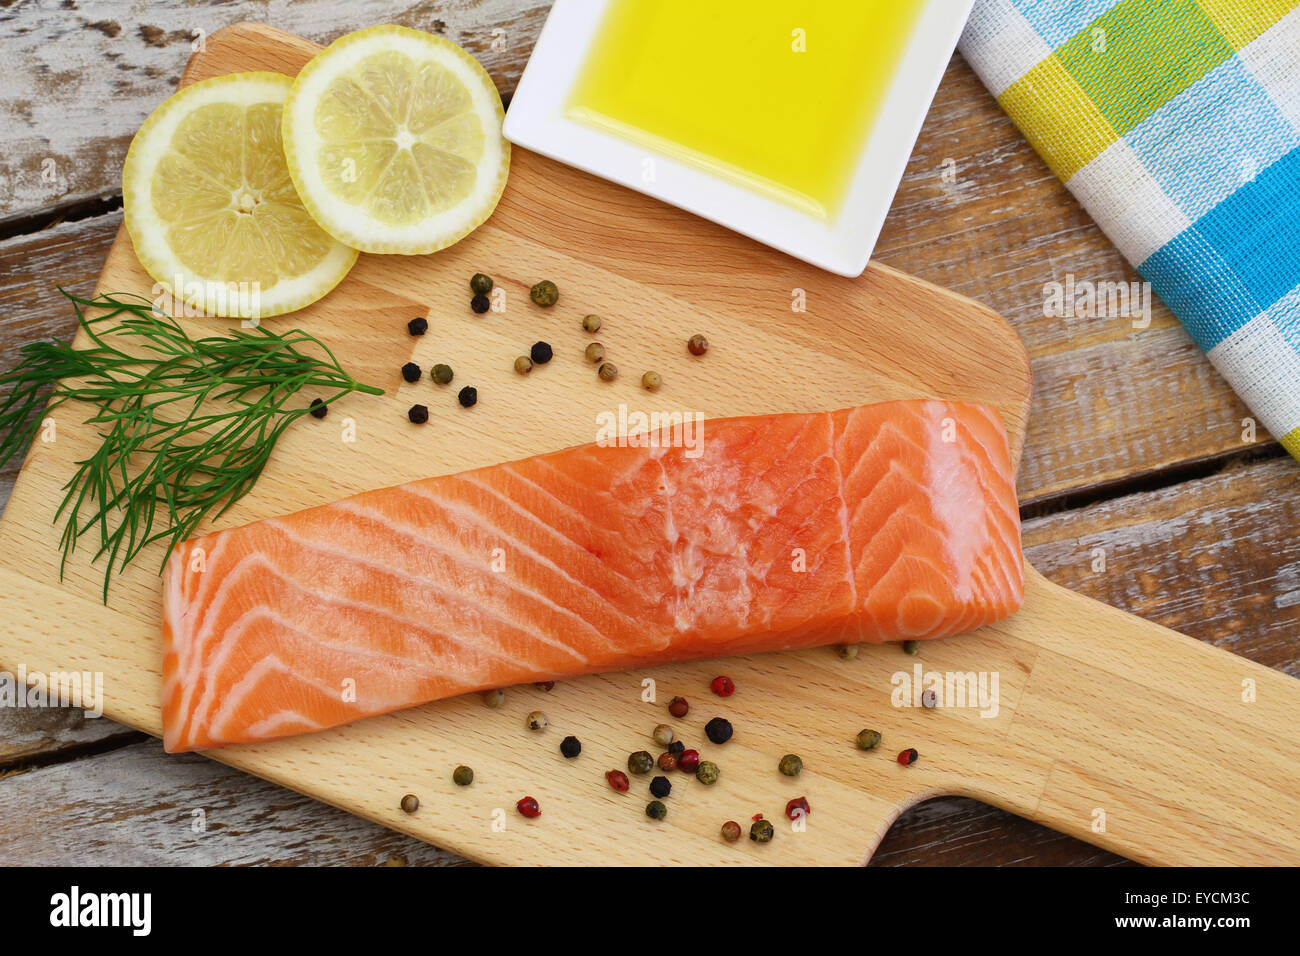 Raw salmon steak on wooden board Stock Photo